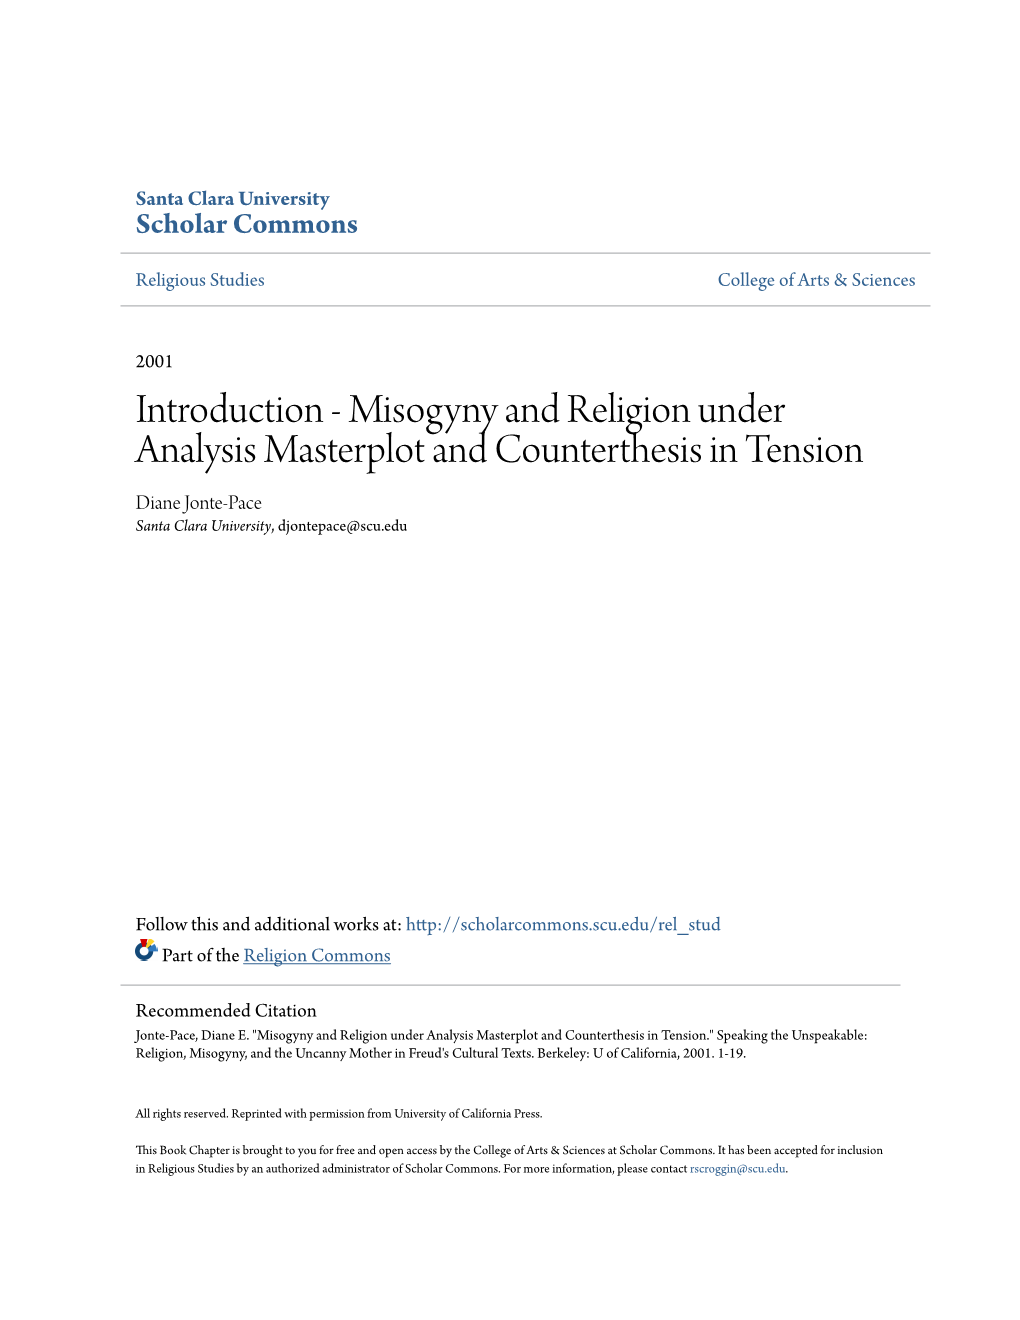 Introduction - Misogyny and Religion Under Analysis Masterplot and Counterthesis in Tension Diane Jonte-Pace Santa Clara University, Djontepace@Scu.Edu